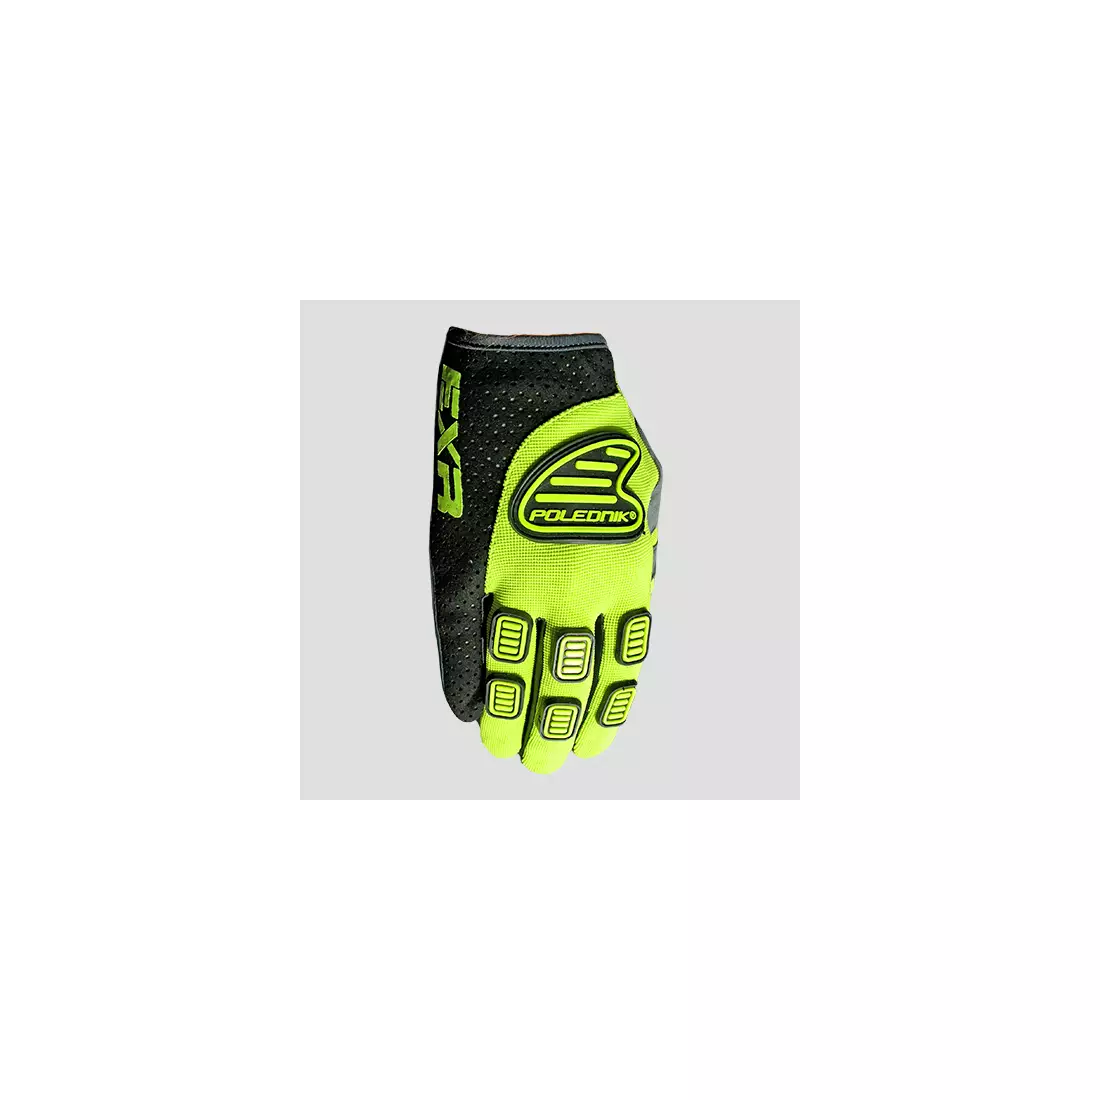 POLEDNIK EXR cycling gloves, color: fluorine